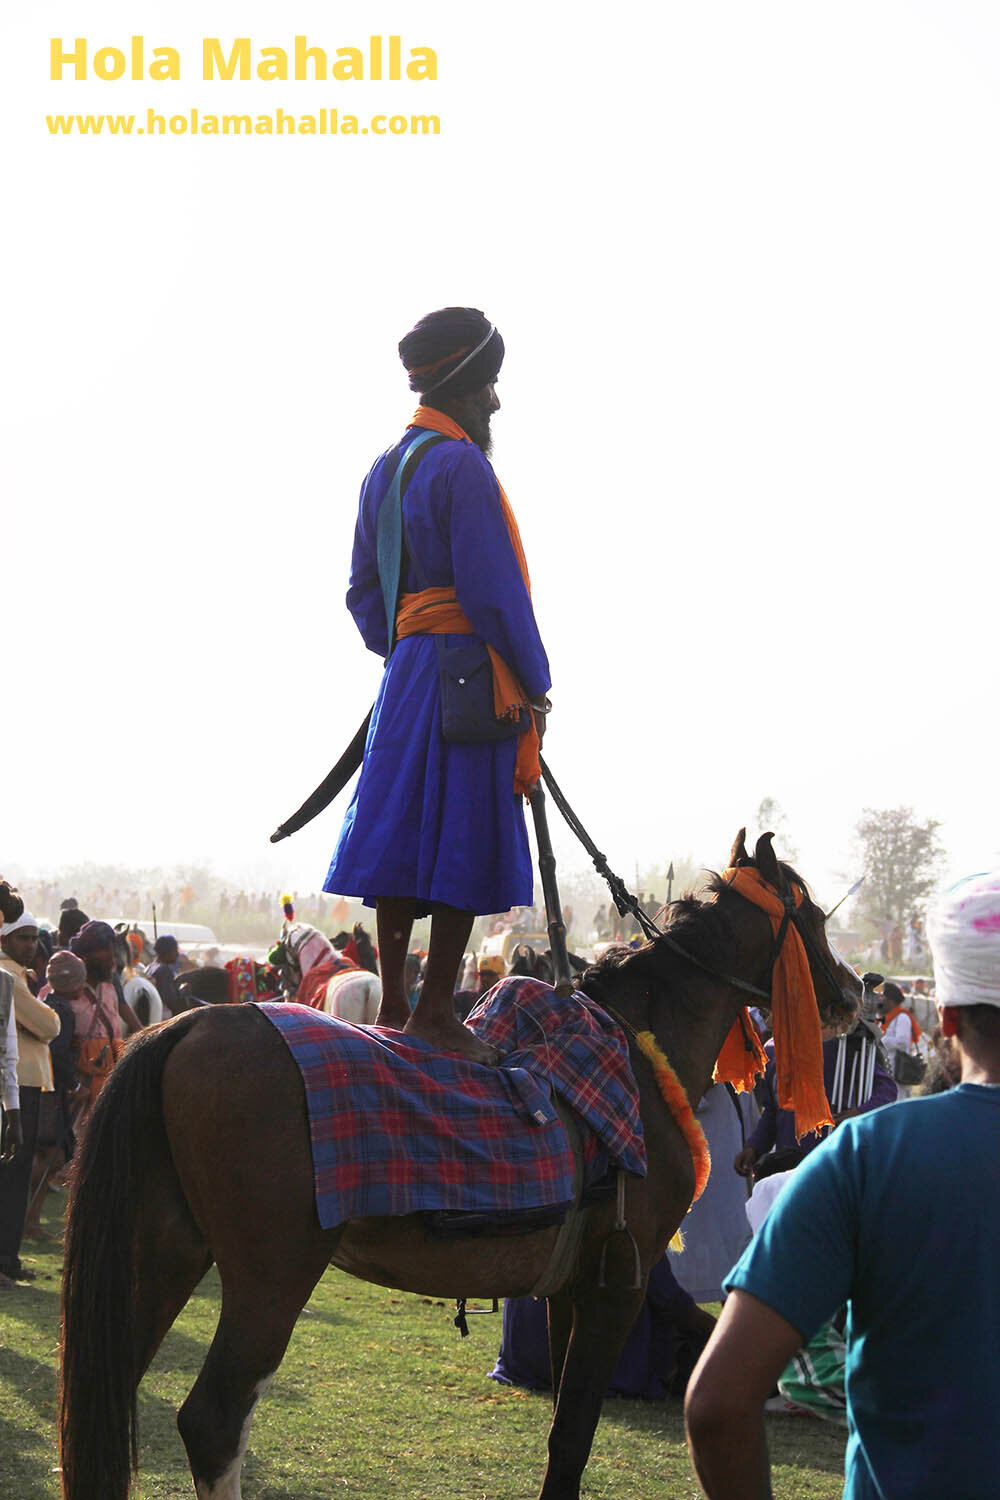 WM IMG_2430 Singh stood on a horse bright 150.jpg